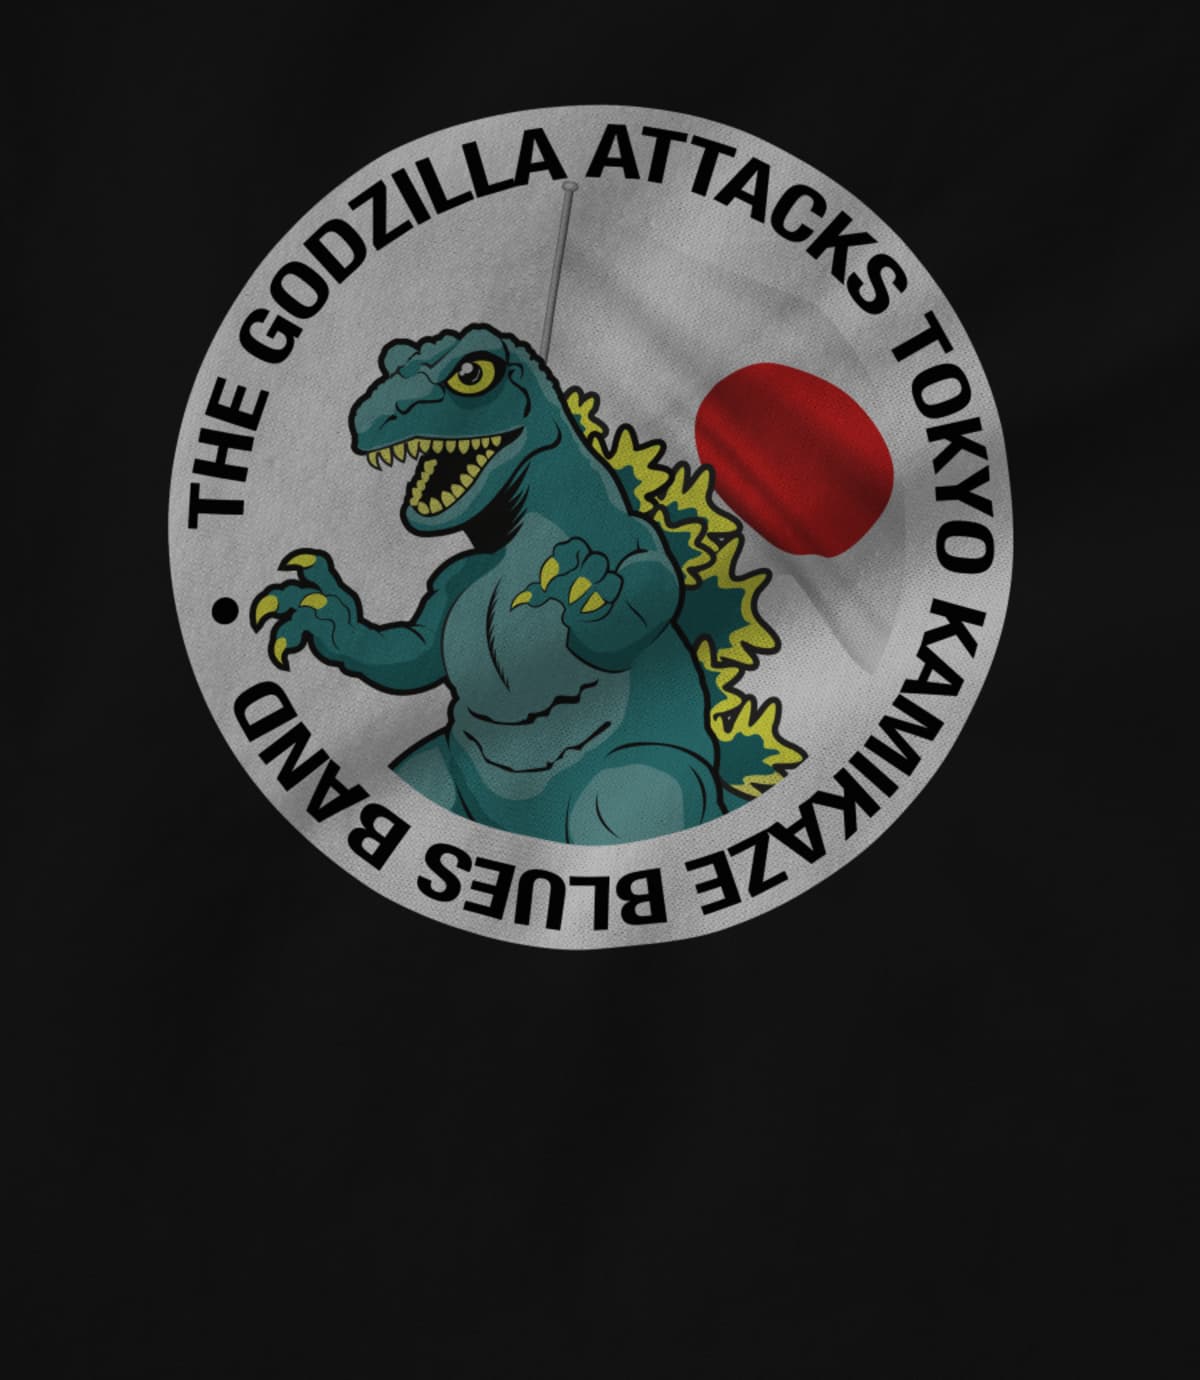 The godzilla attacks tokyo kamikaze blues band  godzilla logo shirt 1601408803